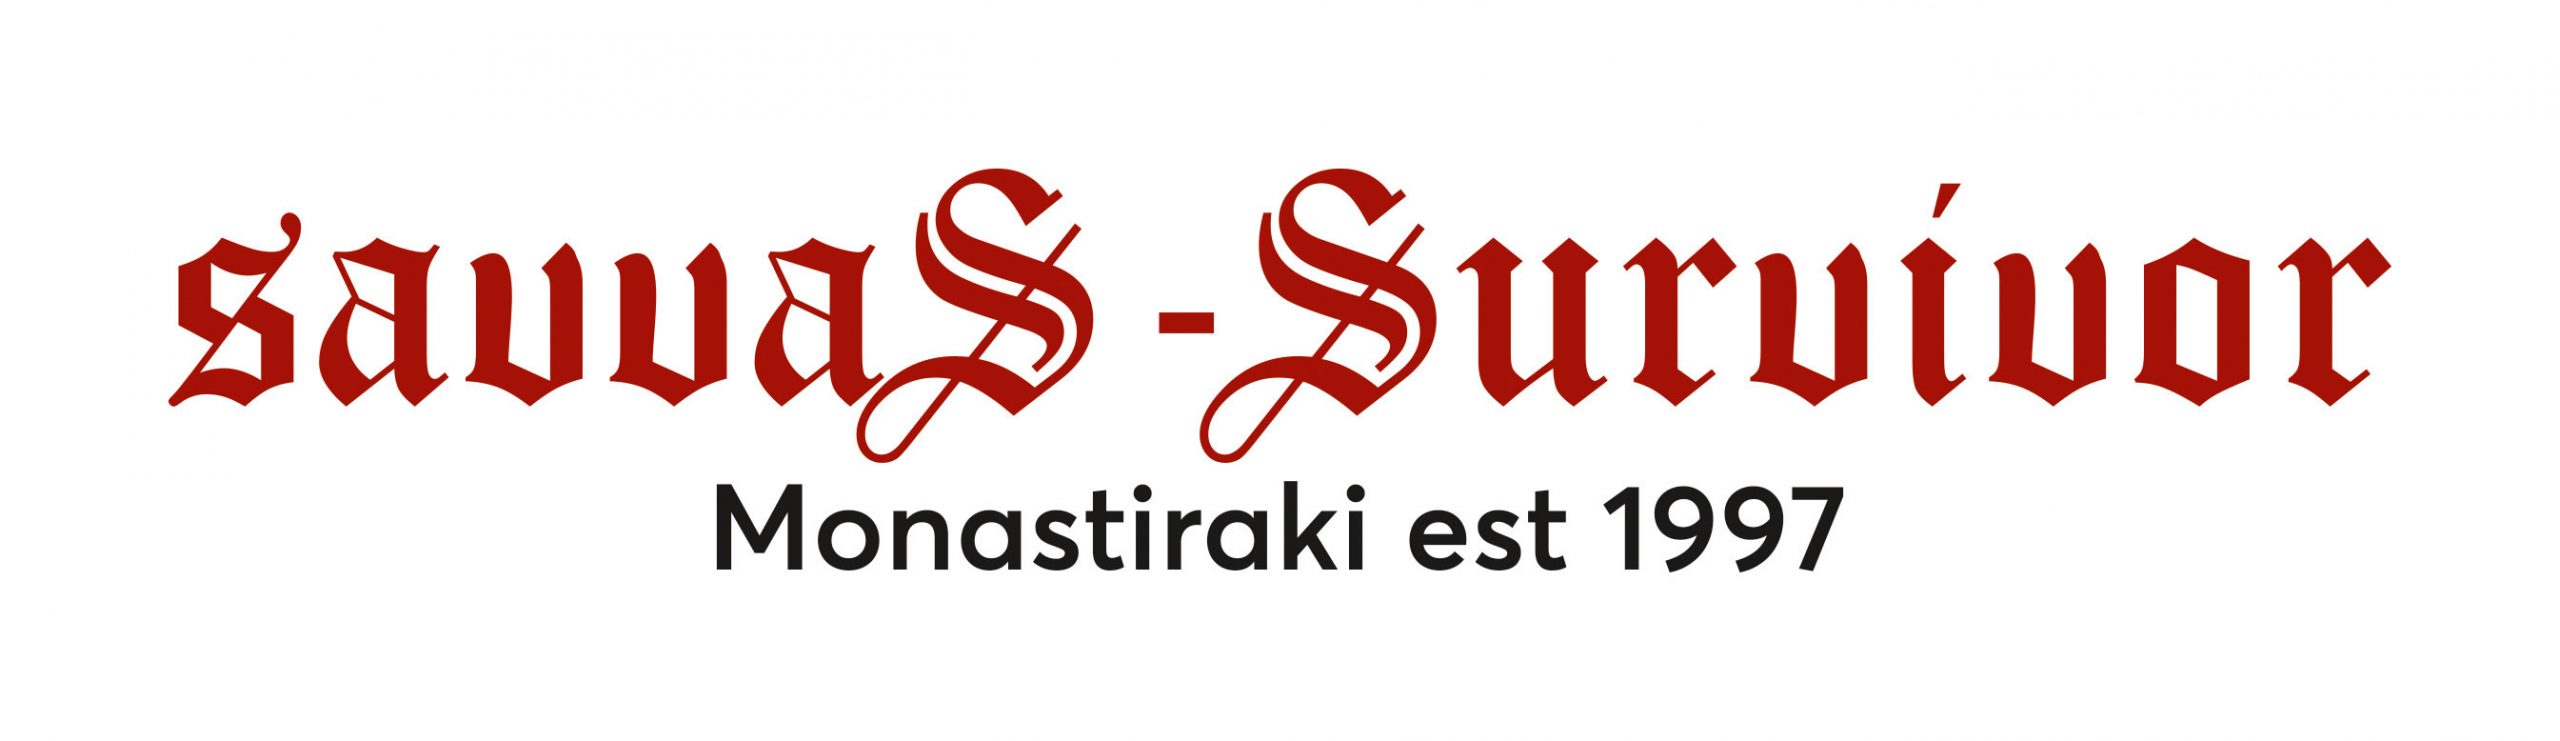 S-S.gr | Savvas Survivor